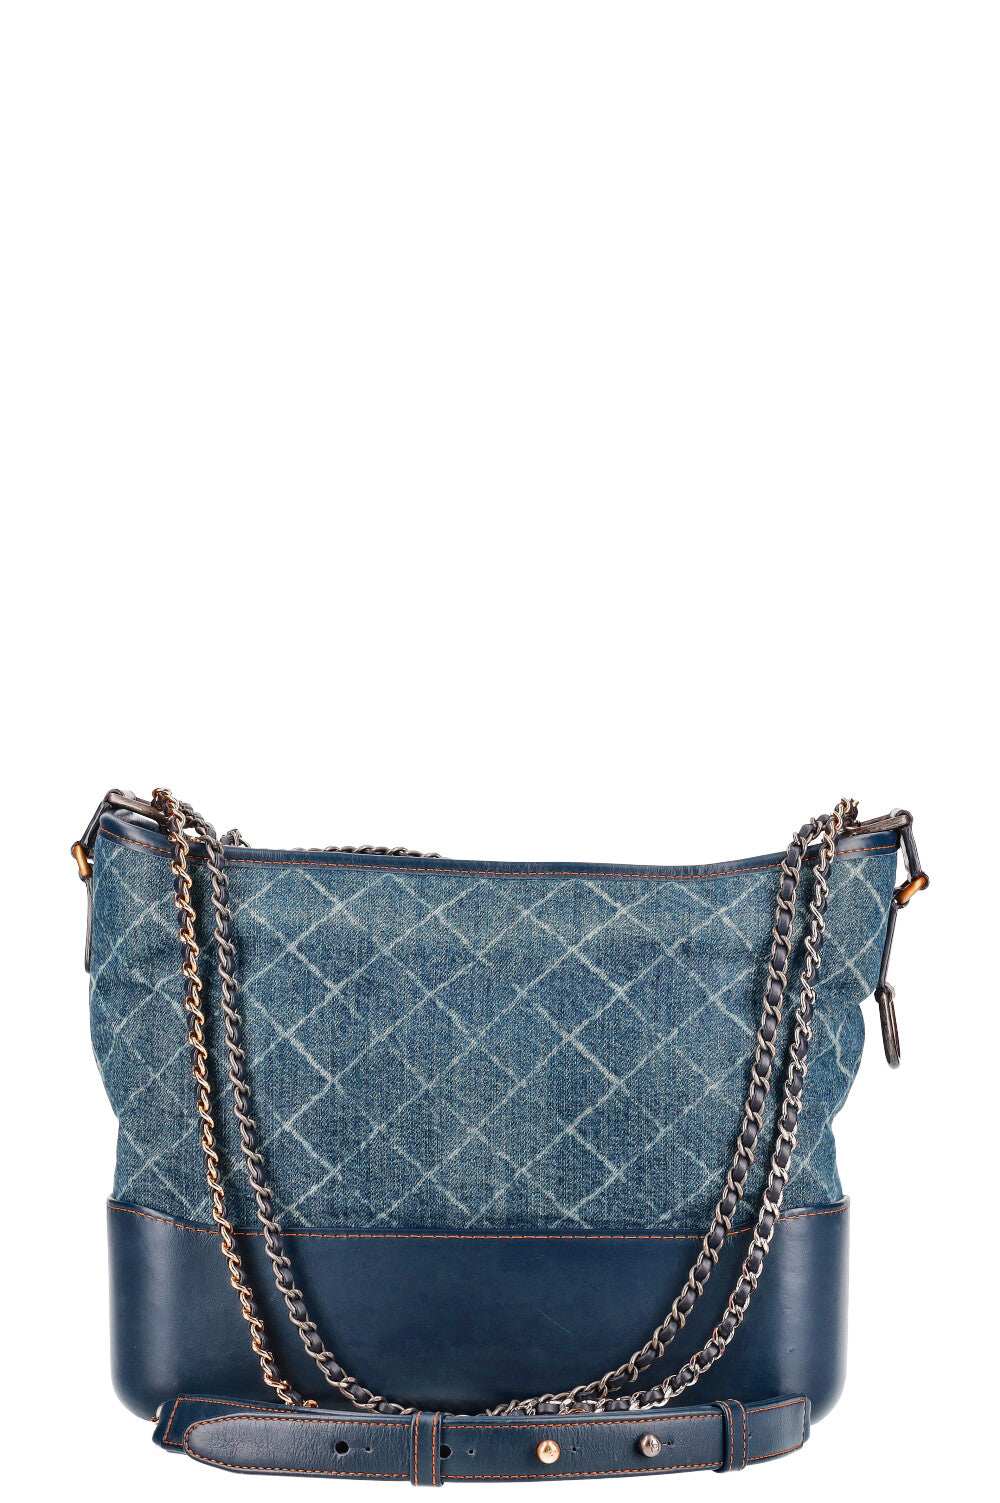 Chanel s Gabrielle Hobo Bag in Blue  Lyst